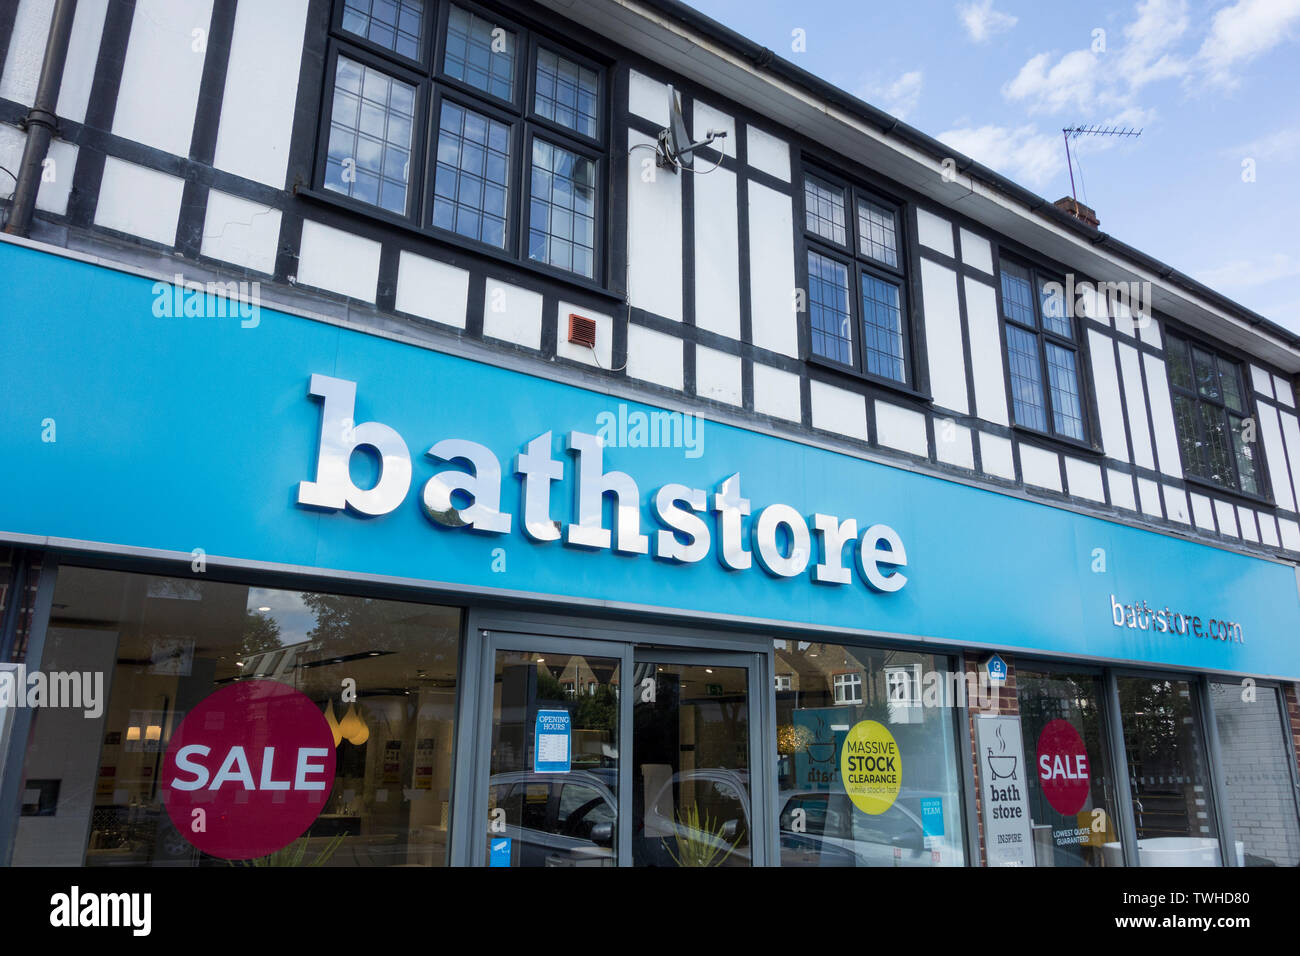 Bathstore shop front, Upper Richmond Road West, East Sheen, London SW14, UK Stock Photo